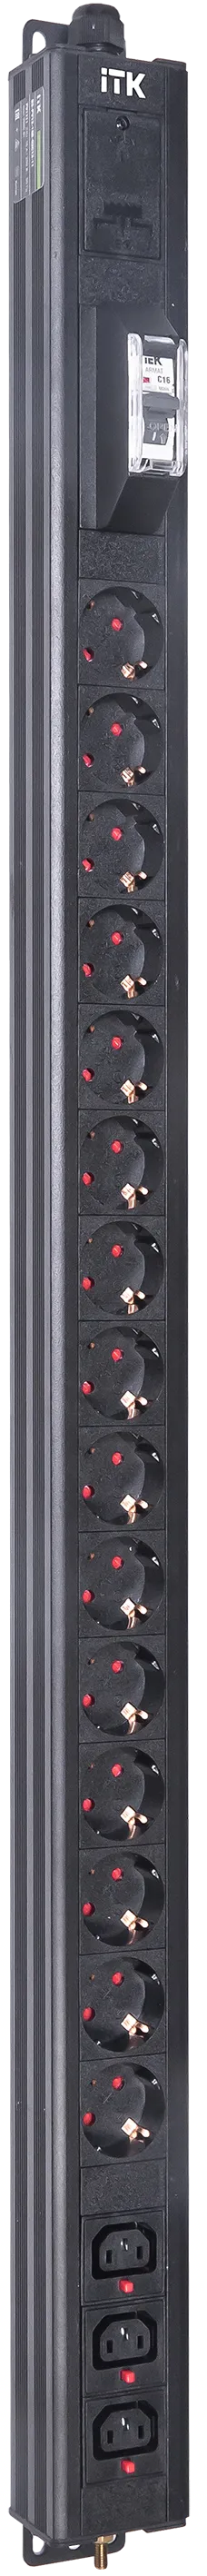 ITK BASE PDU вертикальный PV1111 24U 1 фаза 16А 15 розеток SCHUKO (немецкий стандарт) + 3 розетки C13 кабель 2,6м вилка SCHUKO (немецкий стандарт)